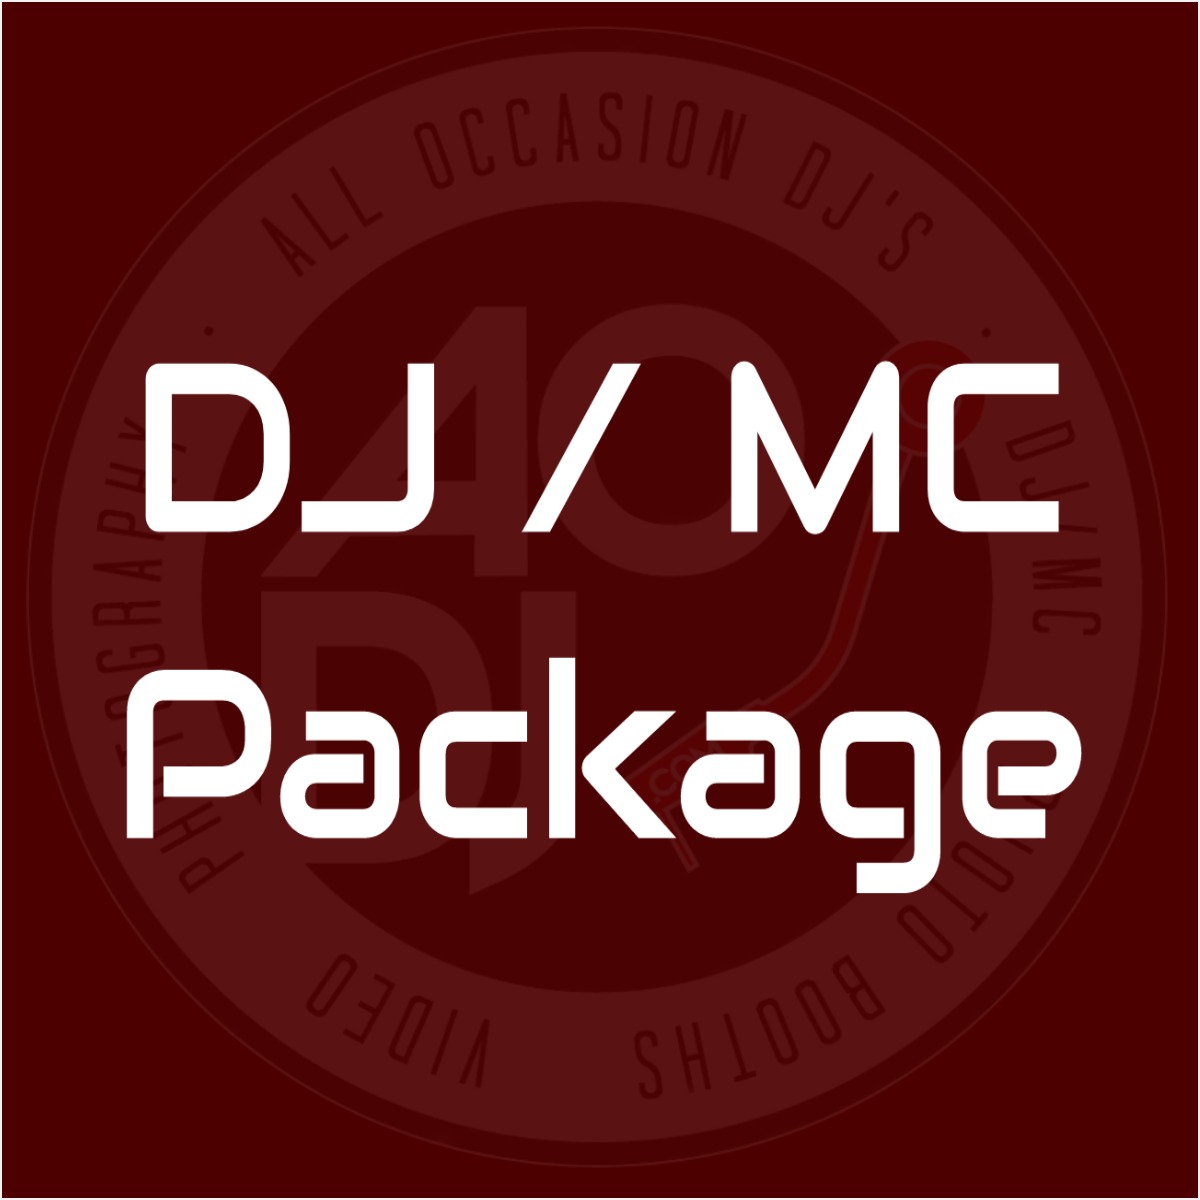 DJ & MC Package